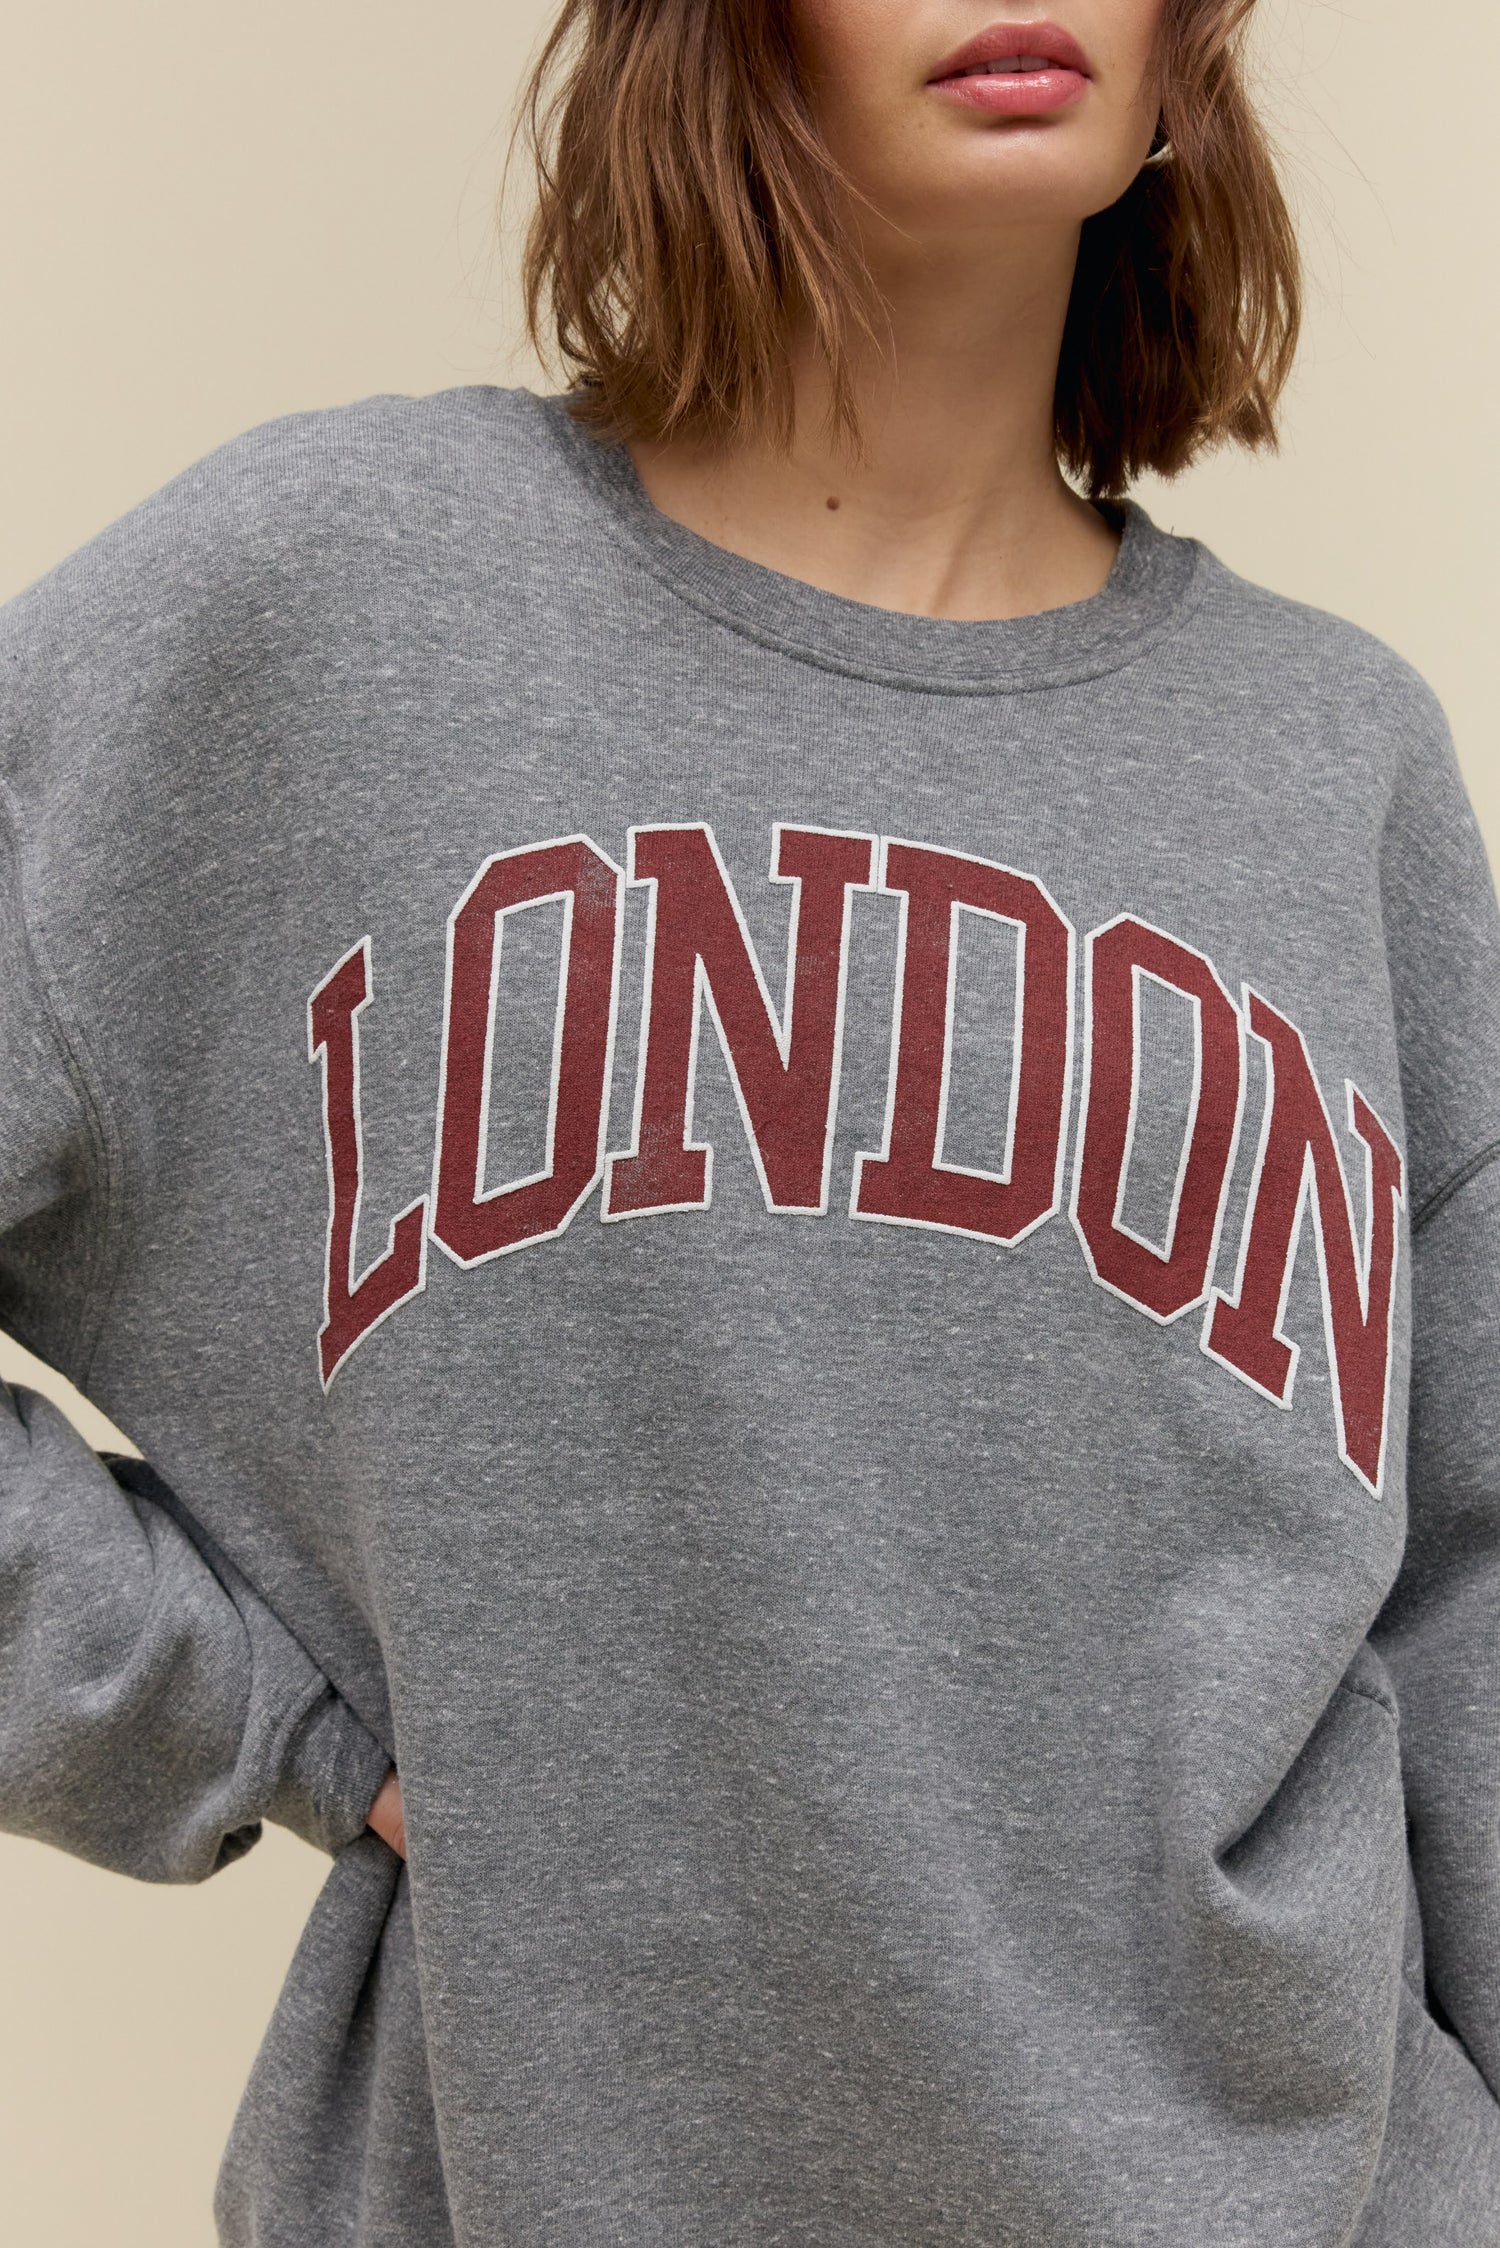 Short-haired model wearing an oversized tri-blend fleece sweatshirt in heather grey with contrast maroon 'London' collegiate style lettering